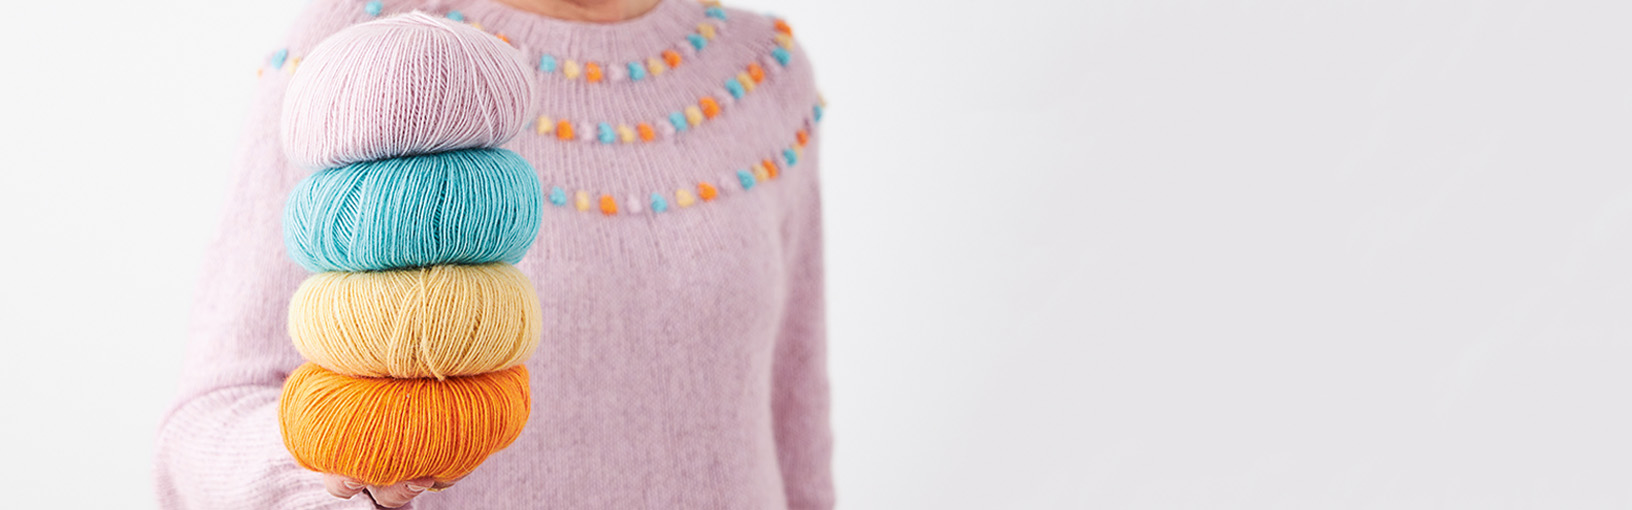 High quality yarns for knitting, crocheting & felting Lana Grossa Yarns